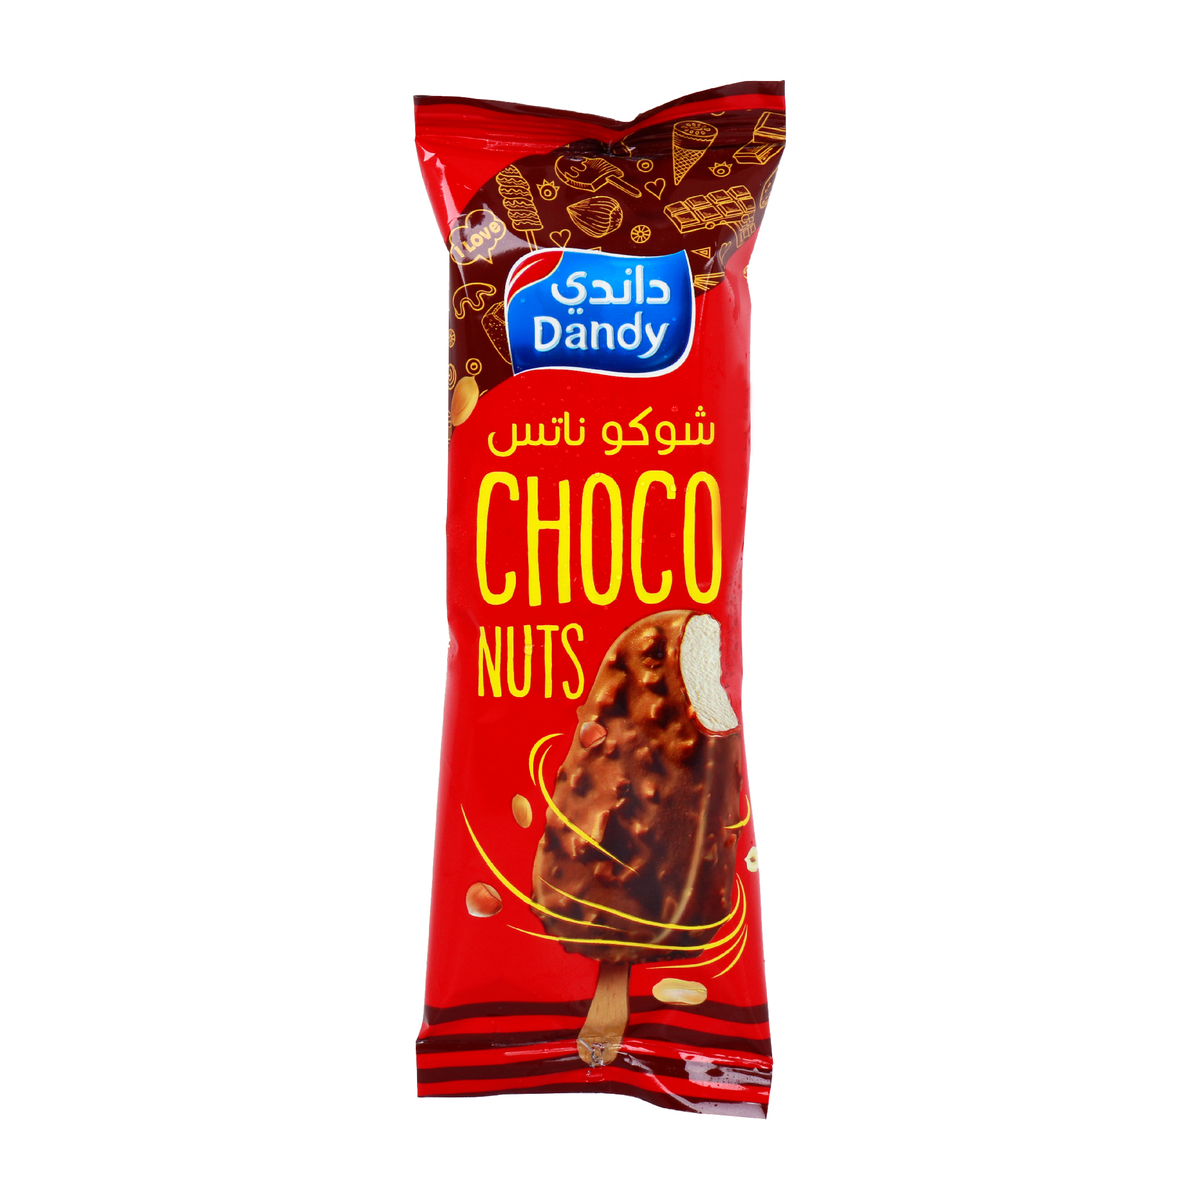 Dandy Ice Cream Choco Nuts 85ml